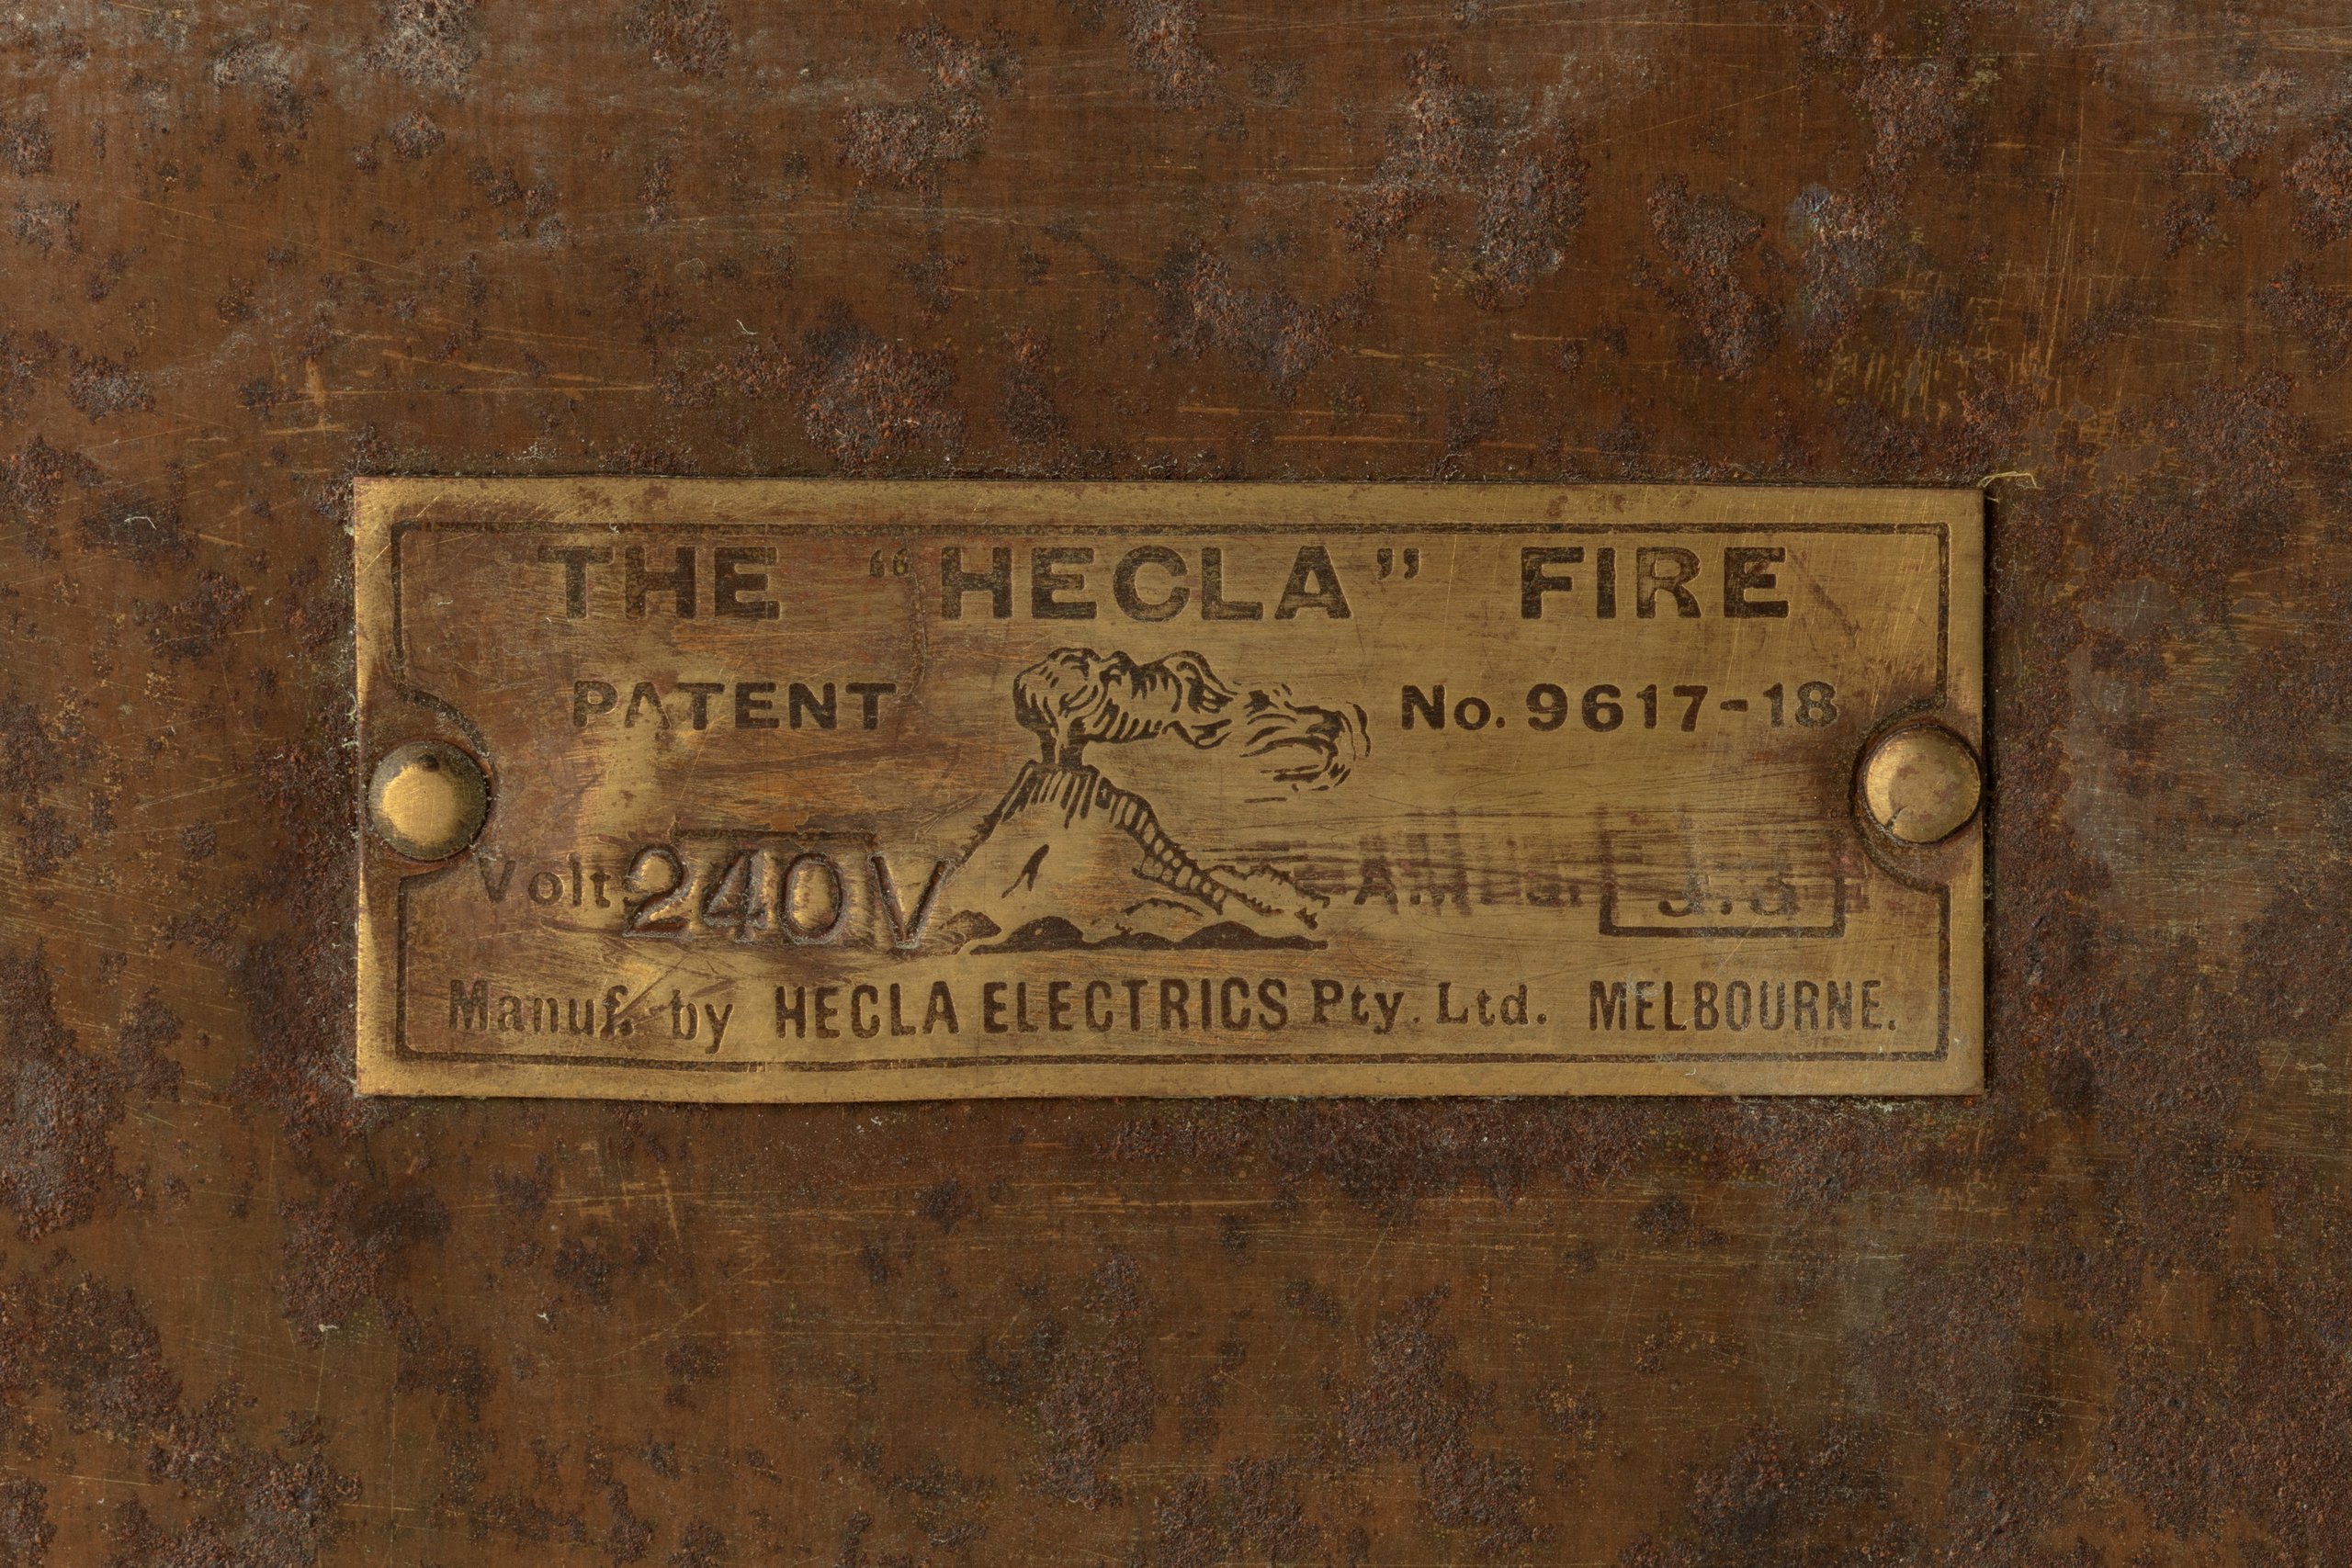 'Hecla Fire' electric radiator by Hecla Electrics